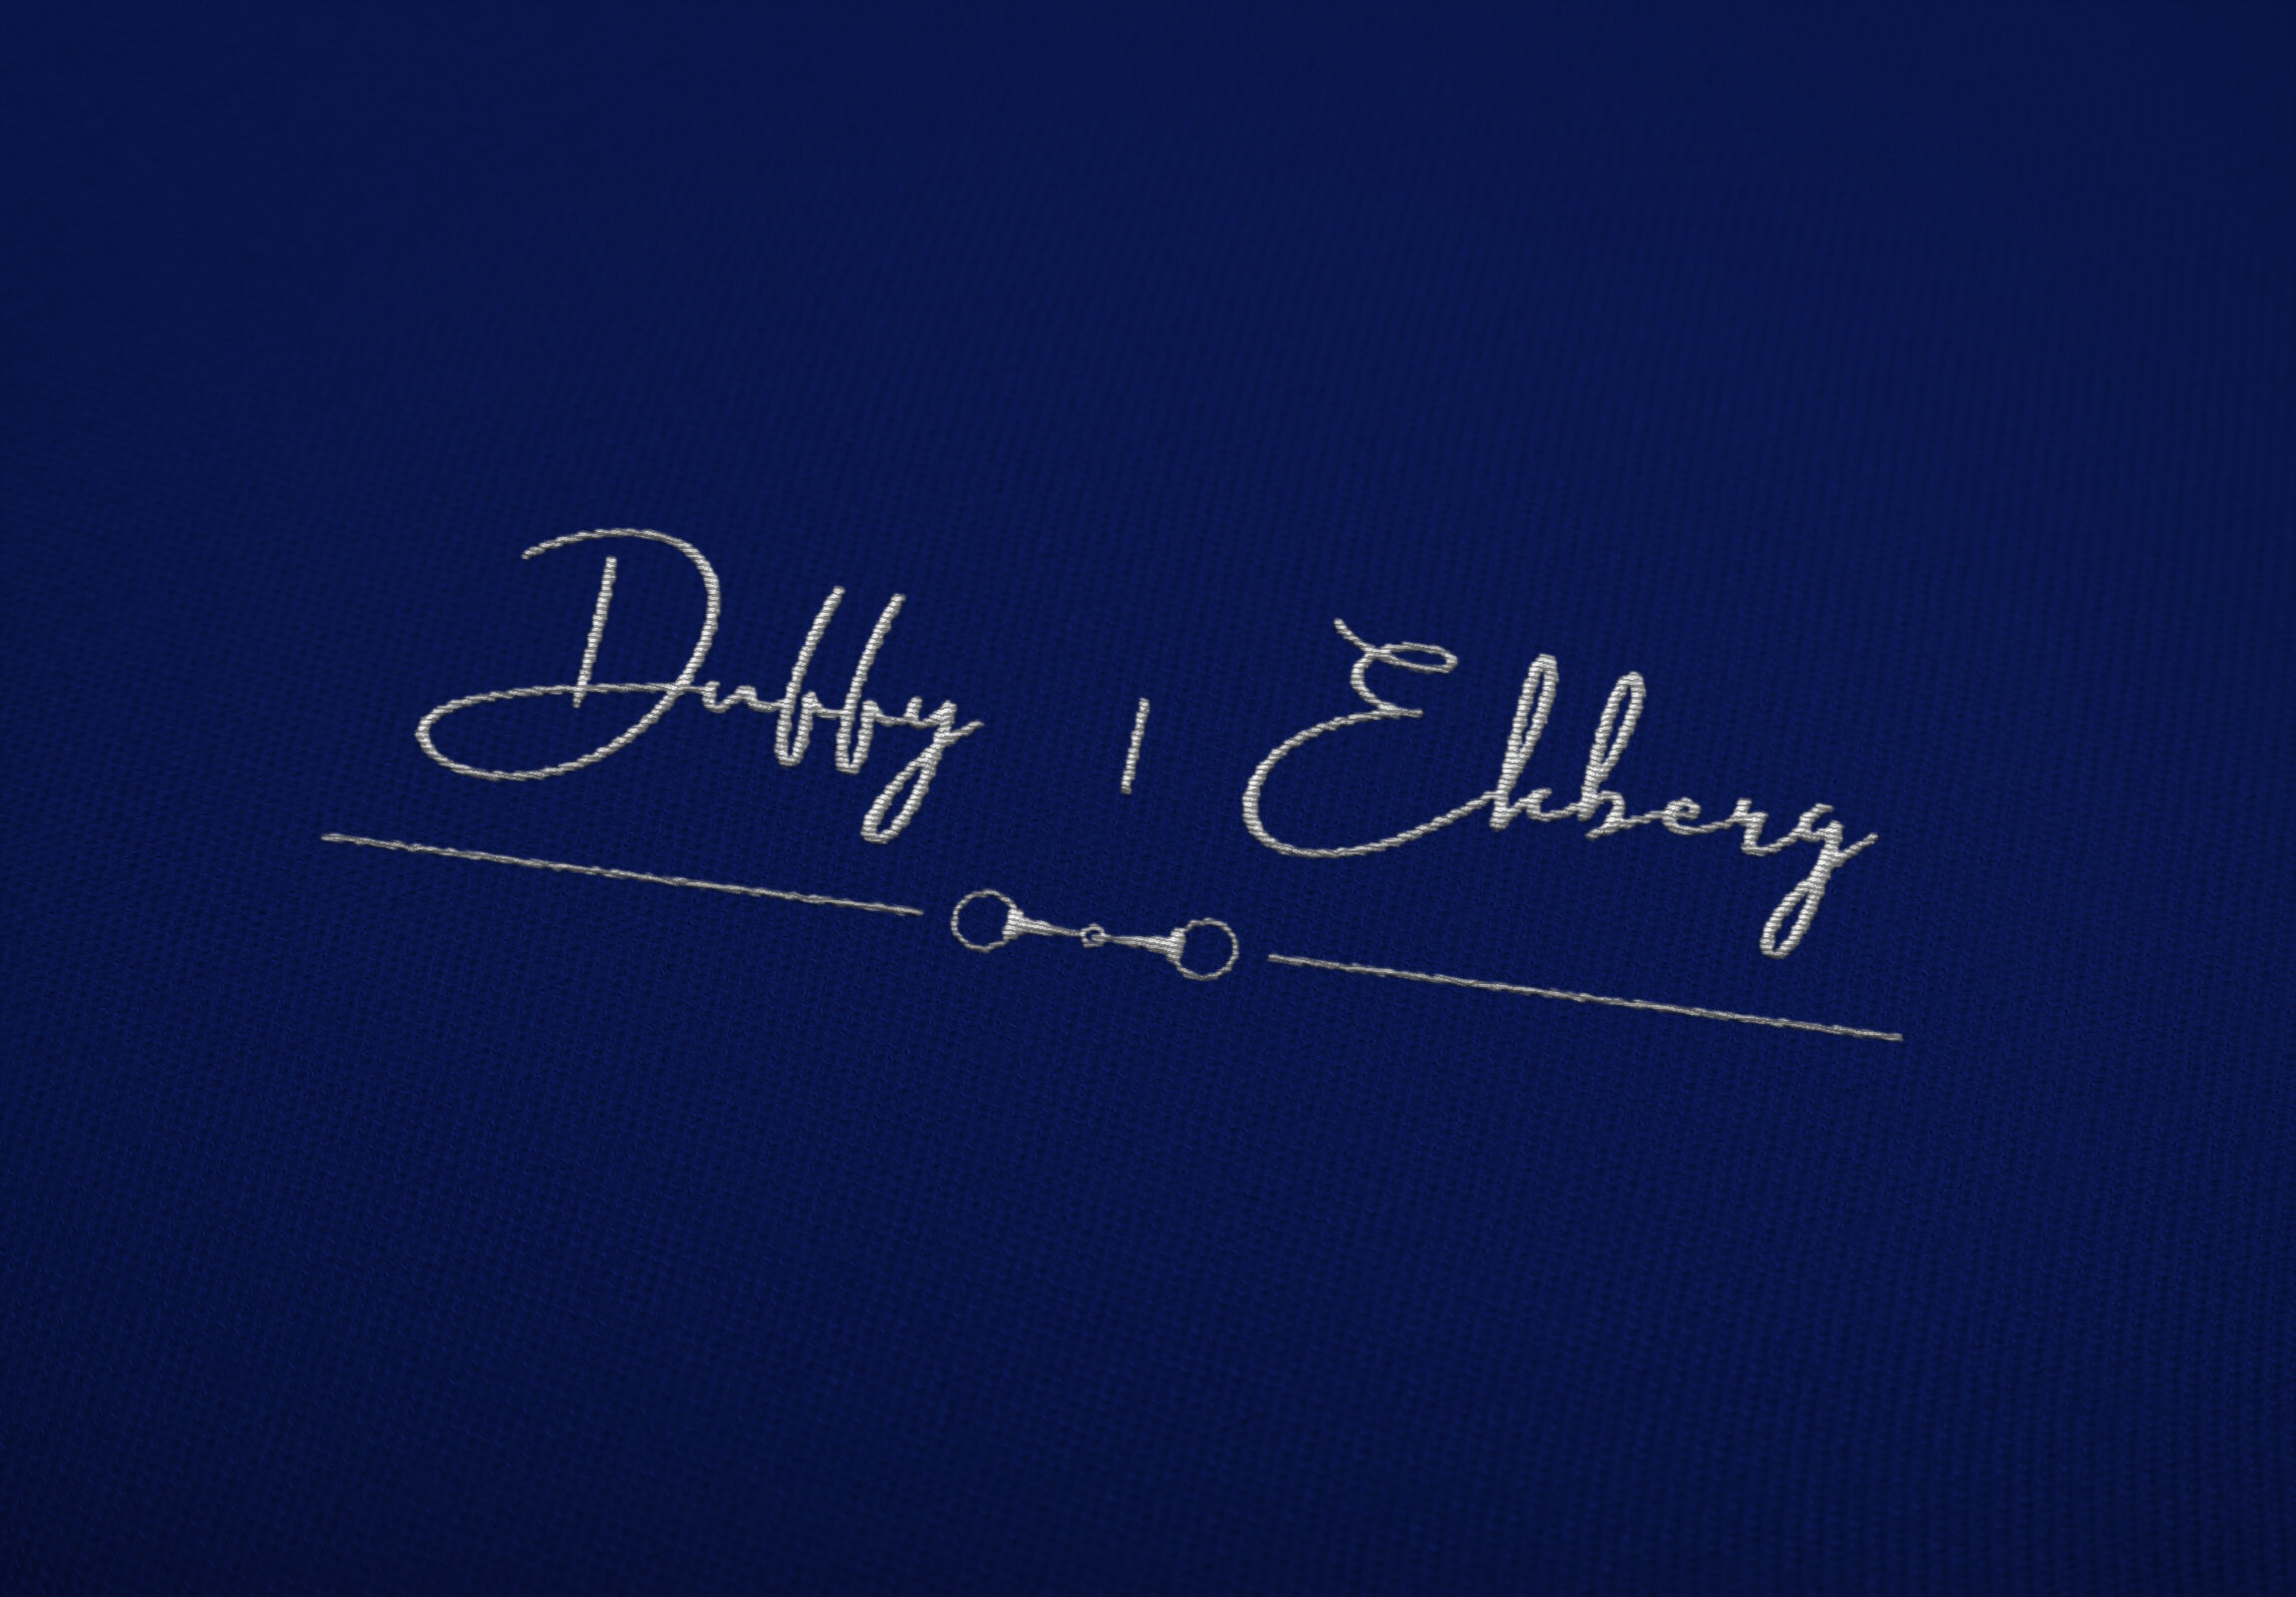 duffy |ekberg blue embroidery.jpg